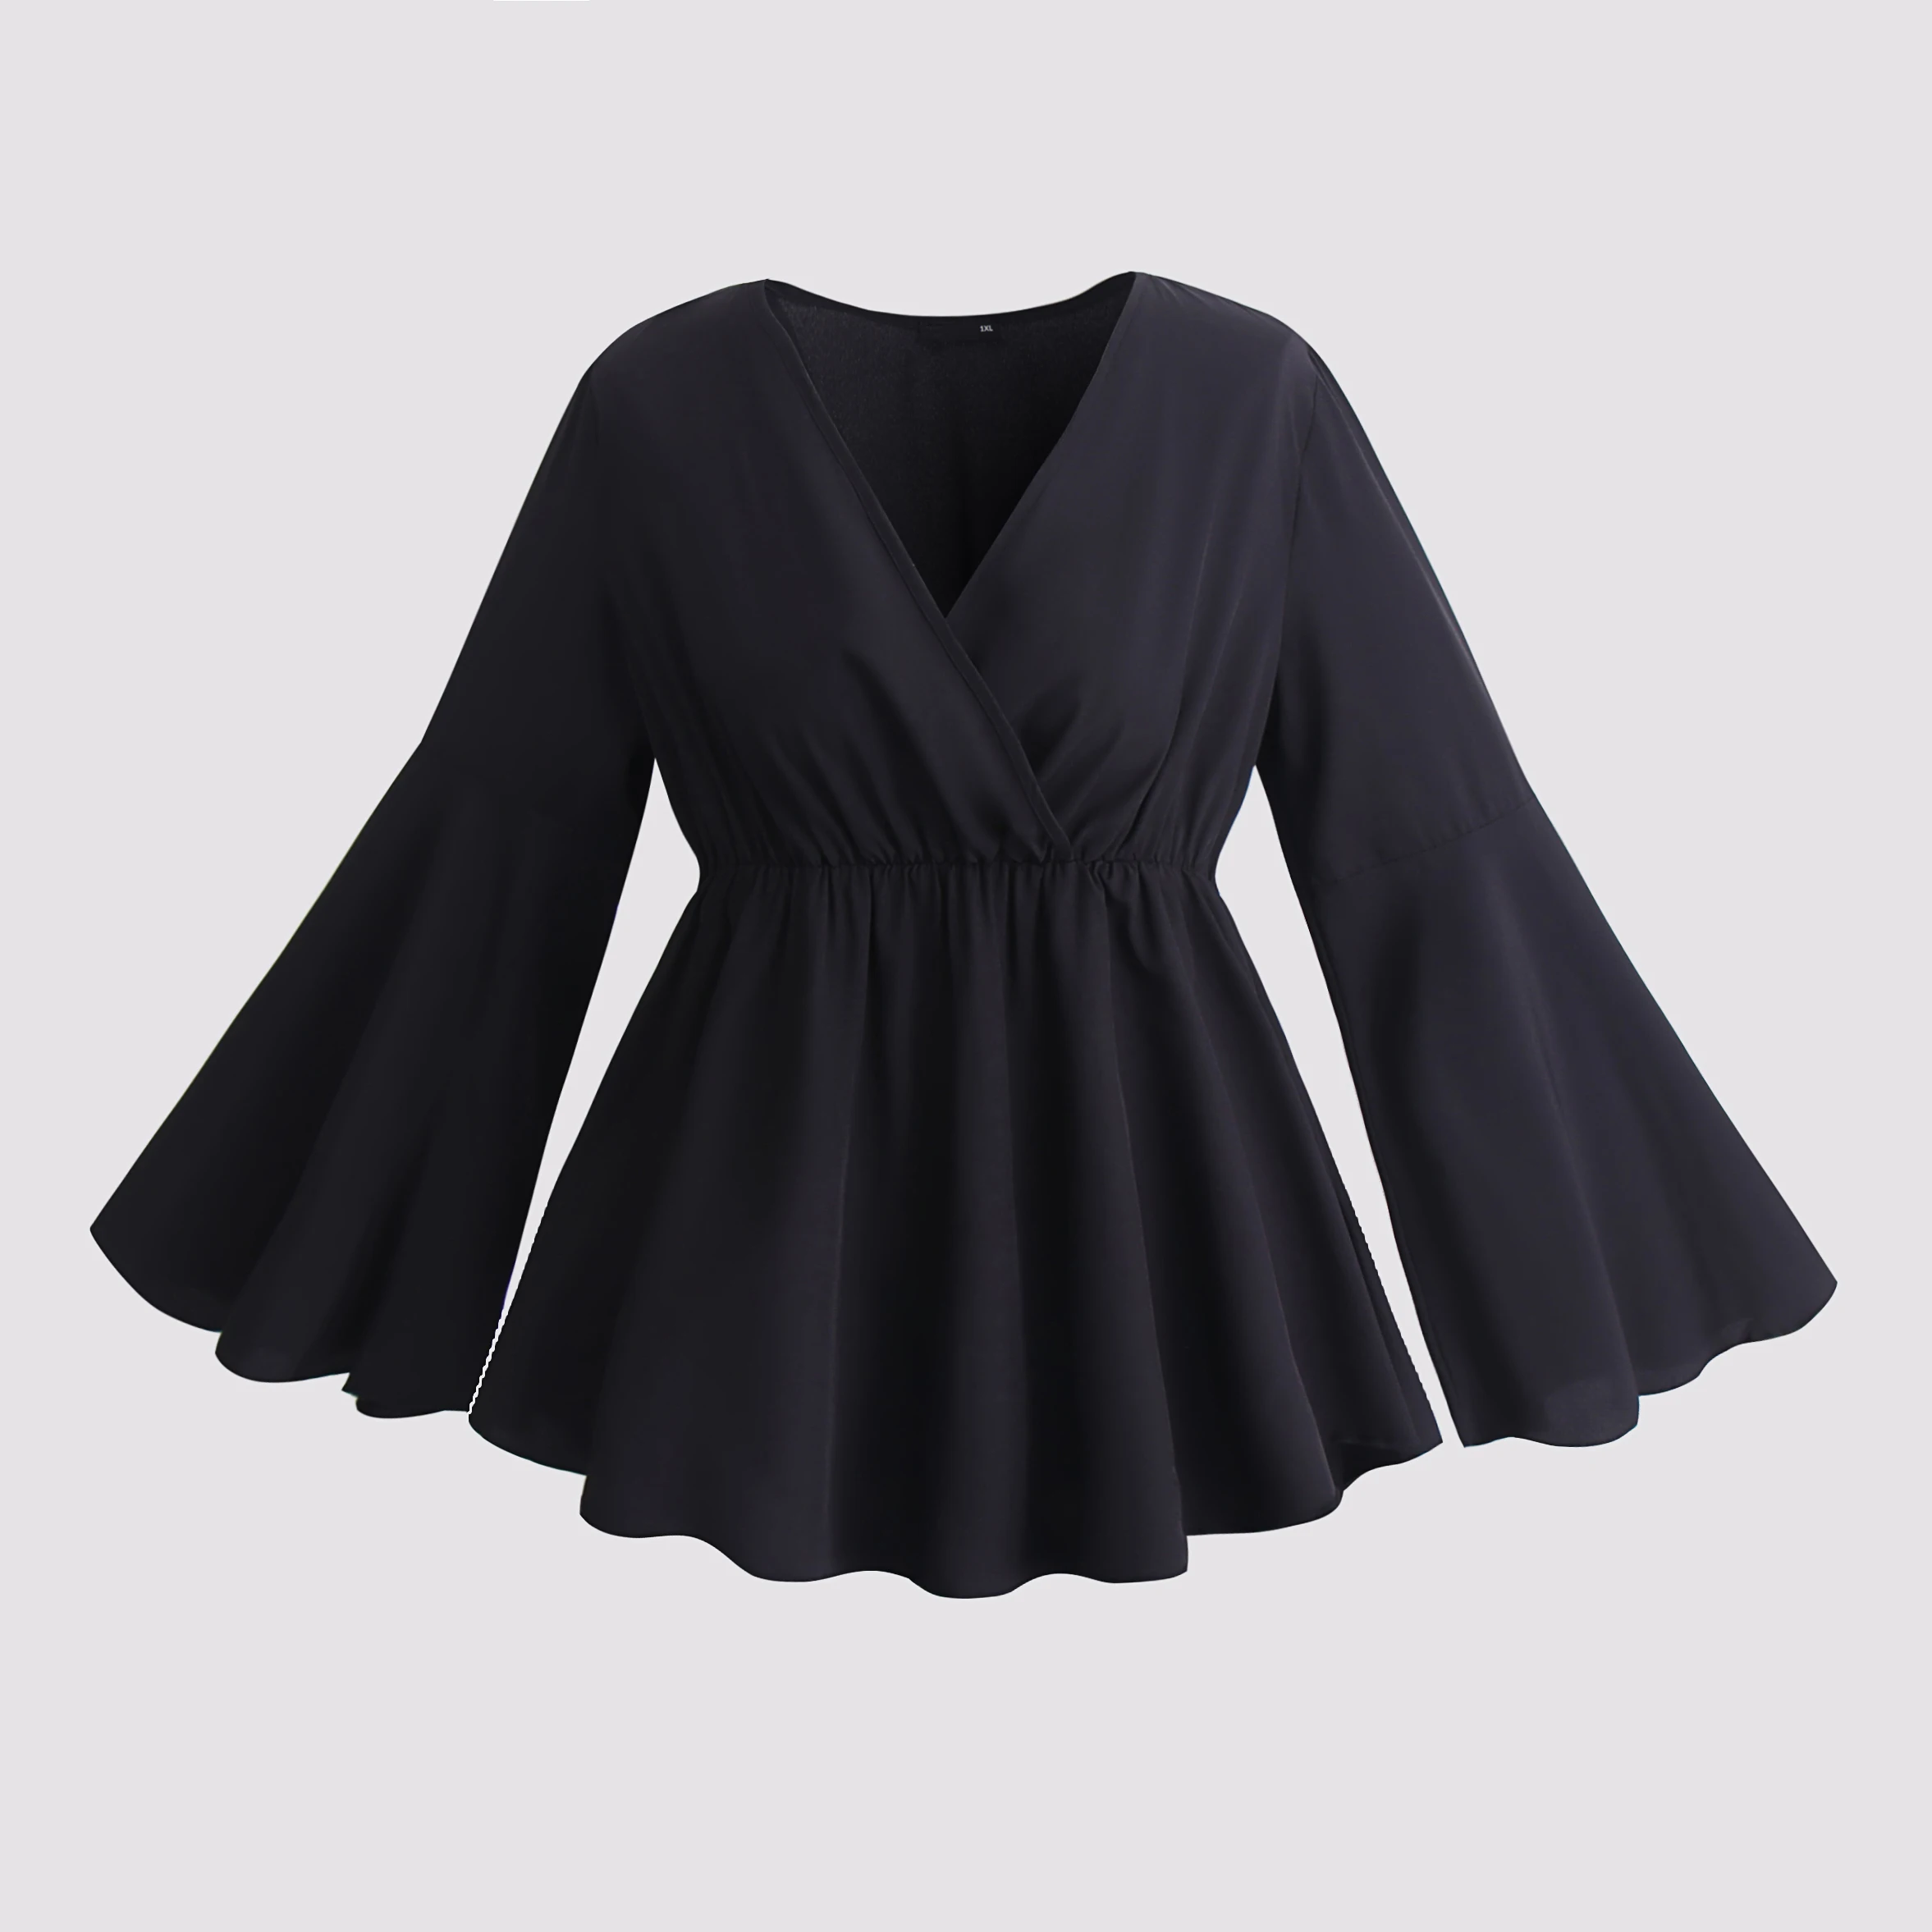 Plus Size 4XL Black Blouses Women's Autumn 2022 Flare Sleeve Peplum Tops V Neck Oversized T Shirts Elegant Casual Solid Clothing